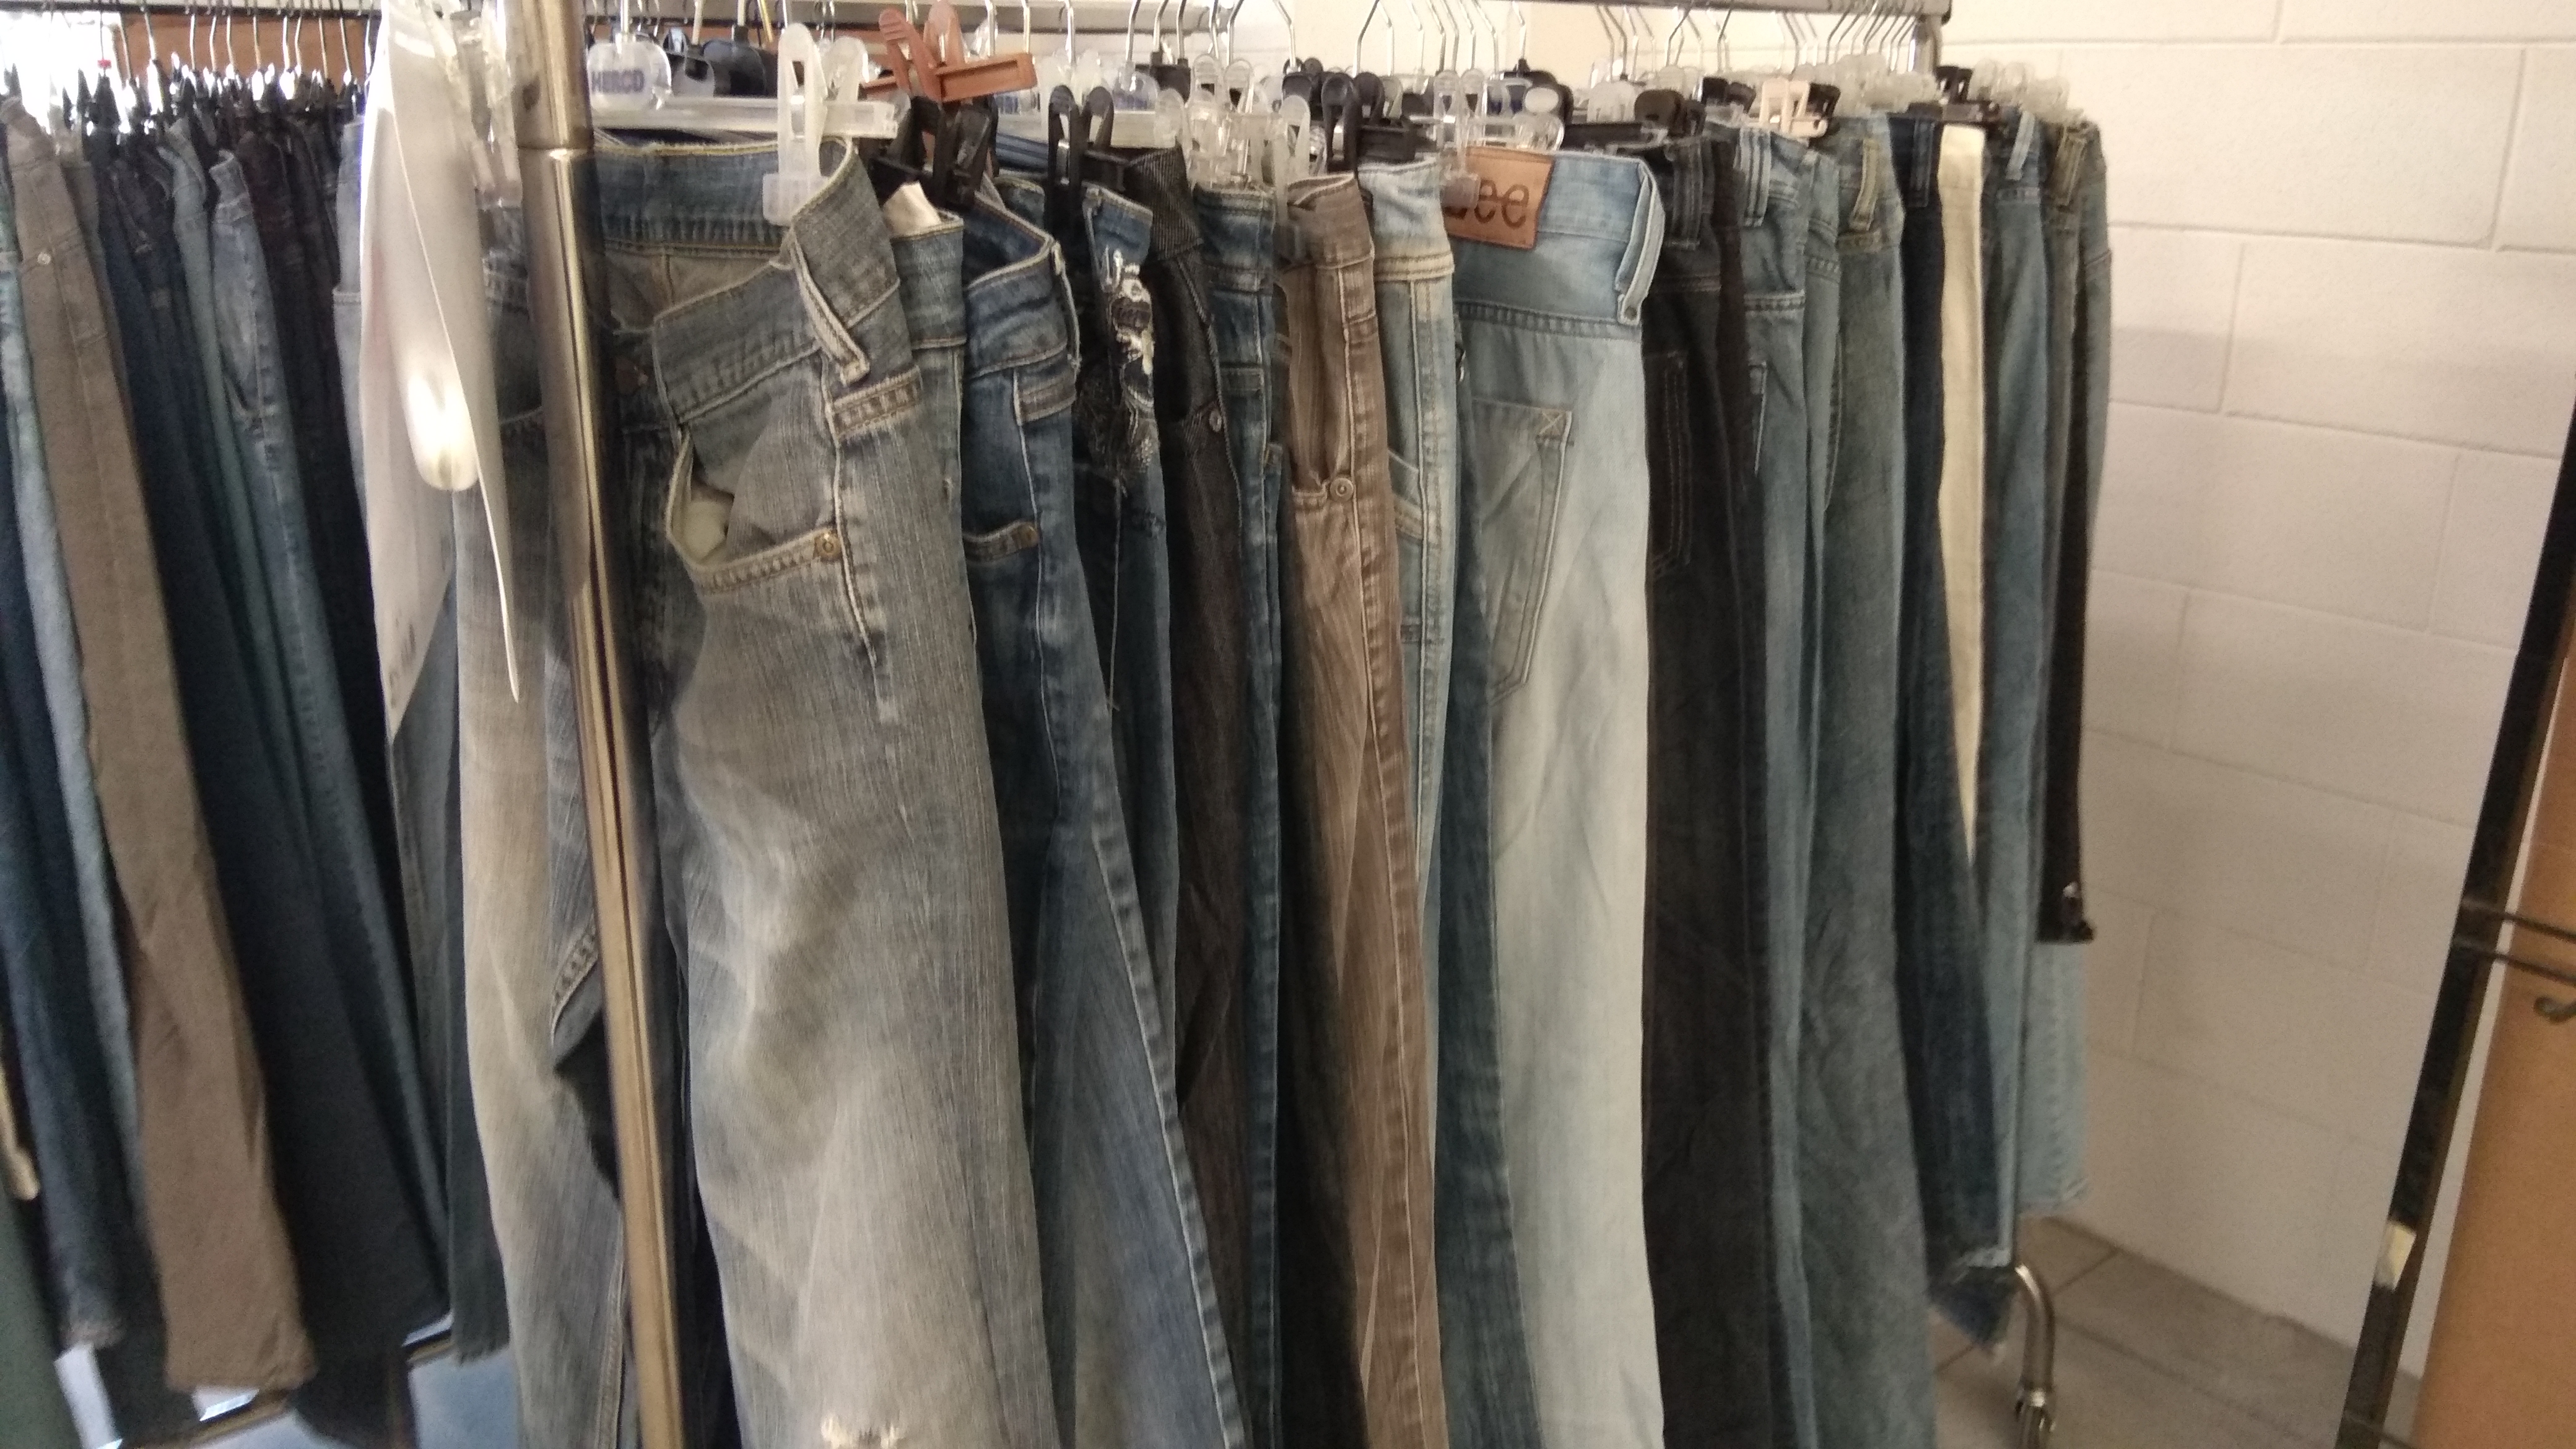 Stocklot used jeans